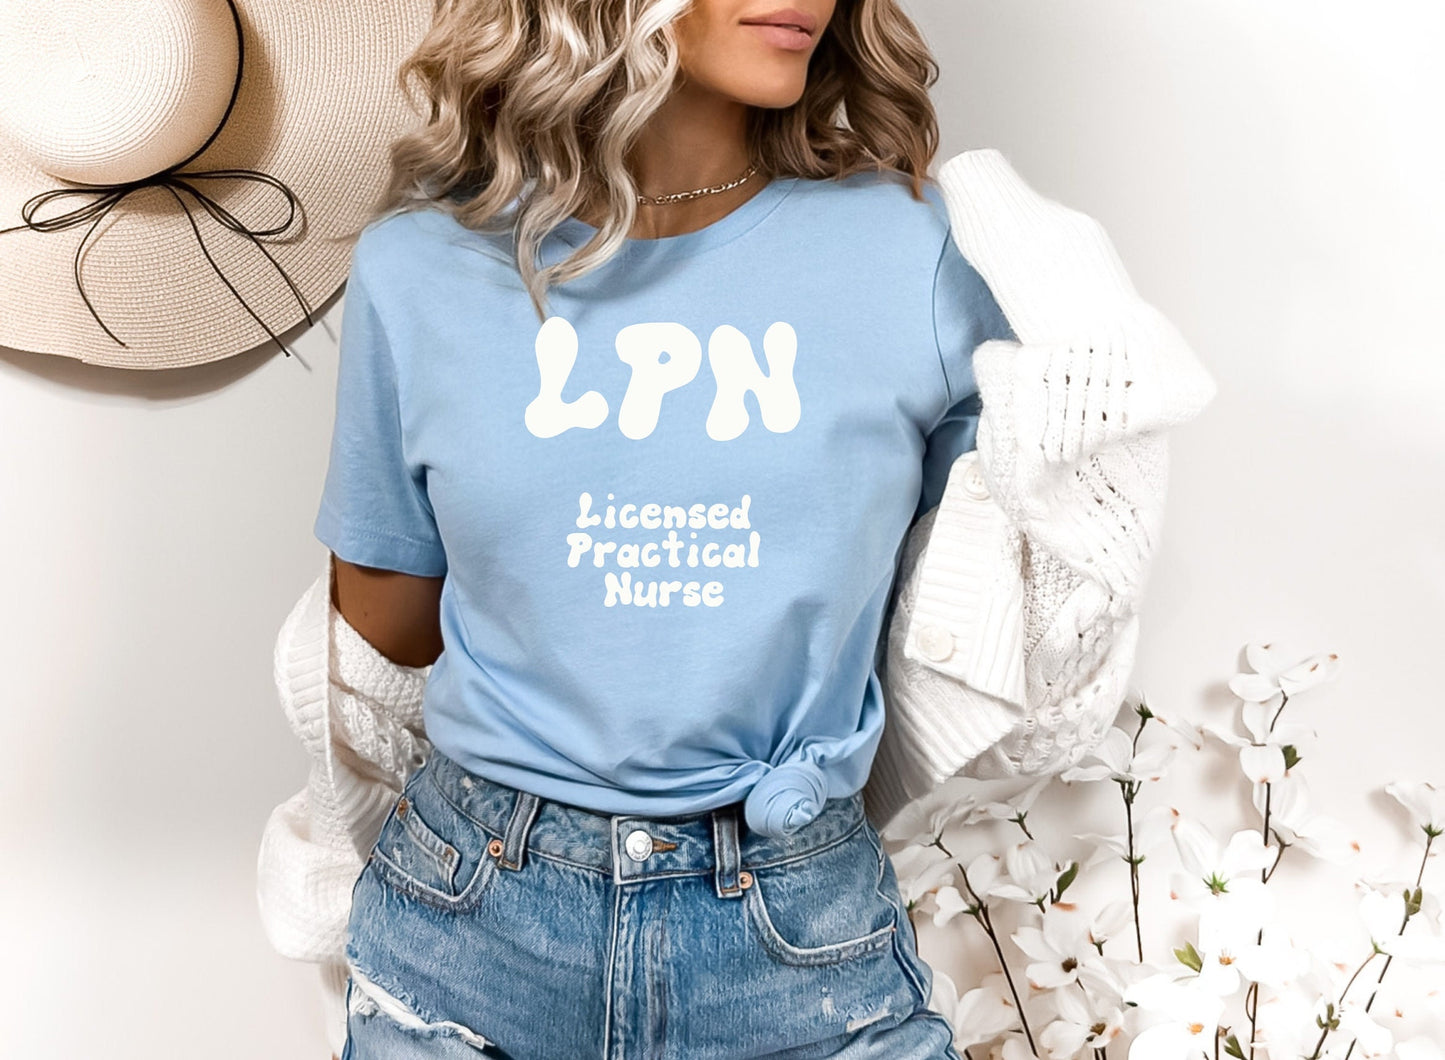 LPN Nurse Shirt, I love nurses shirt, Awesome gift shirt for nurses, gift shirt for a special nurse, Thank you gift shirt for nurses